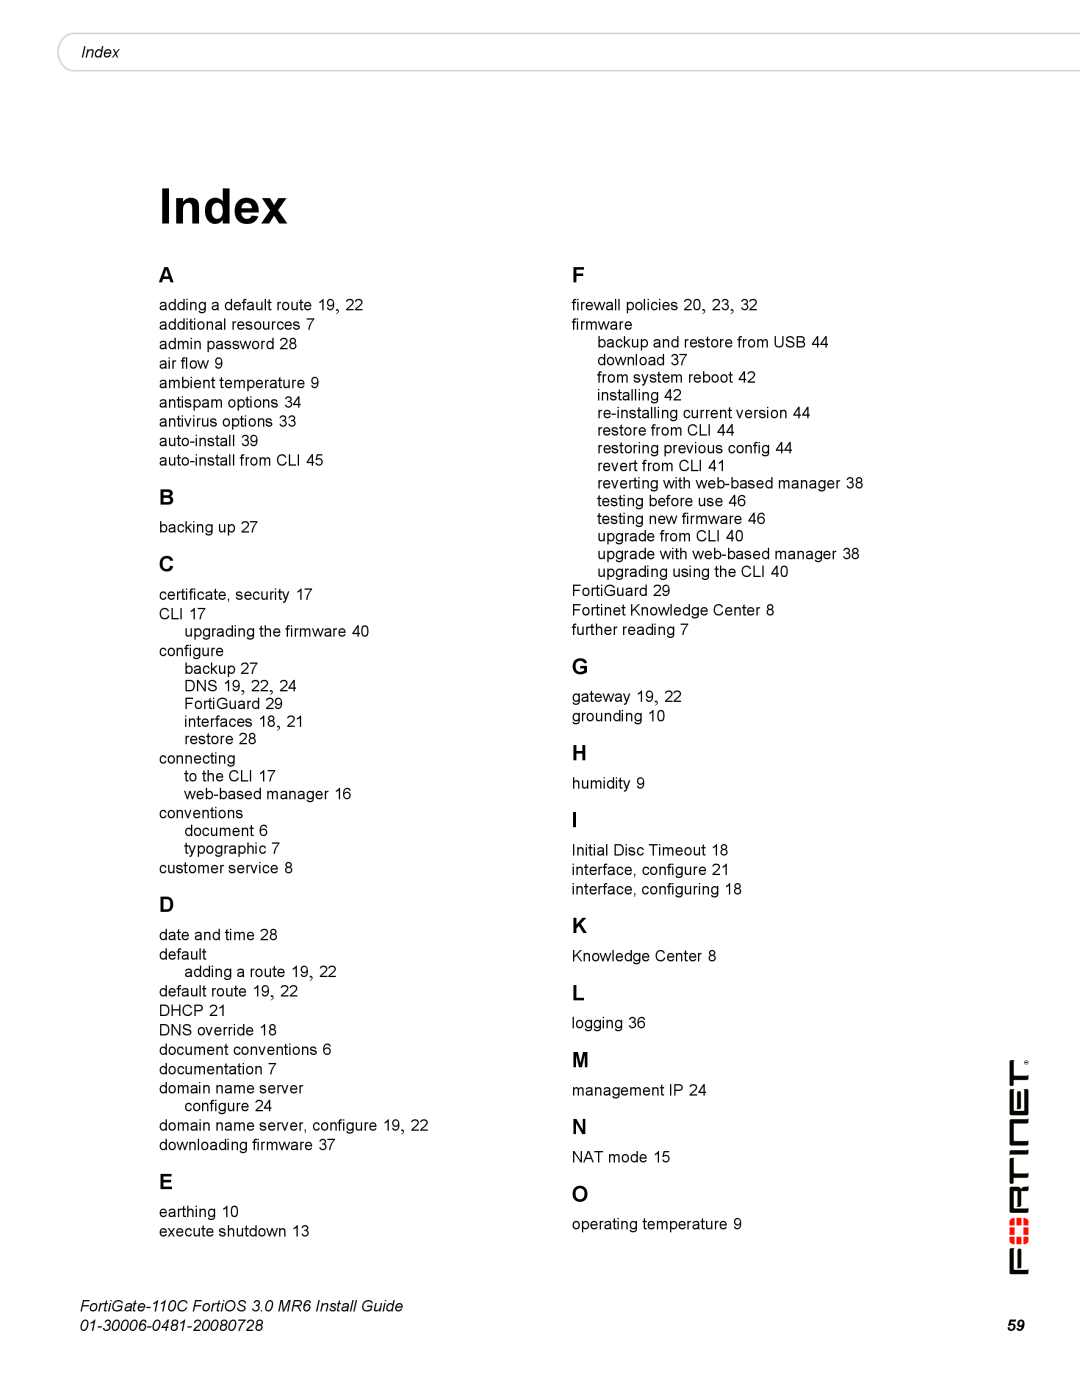 Fortinet 110C manual Index 